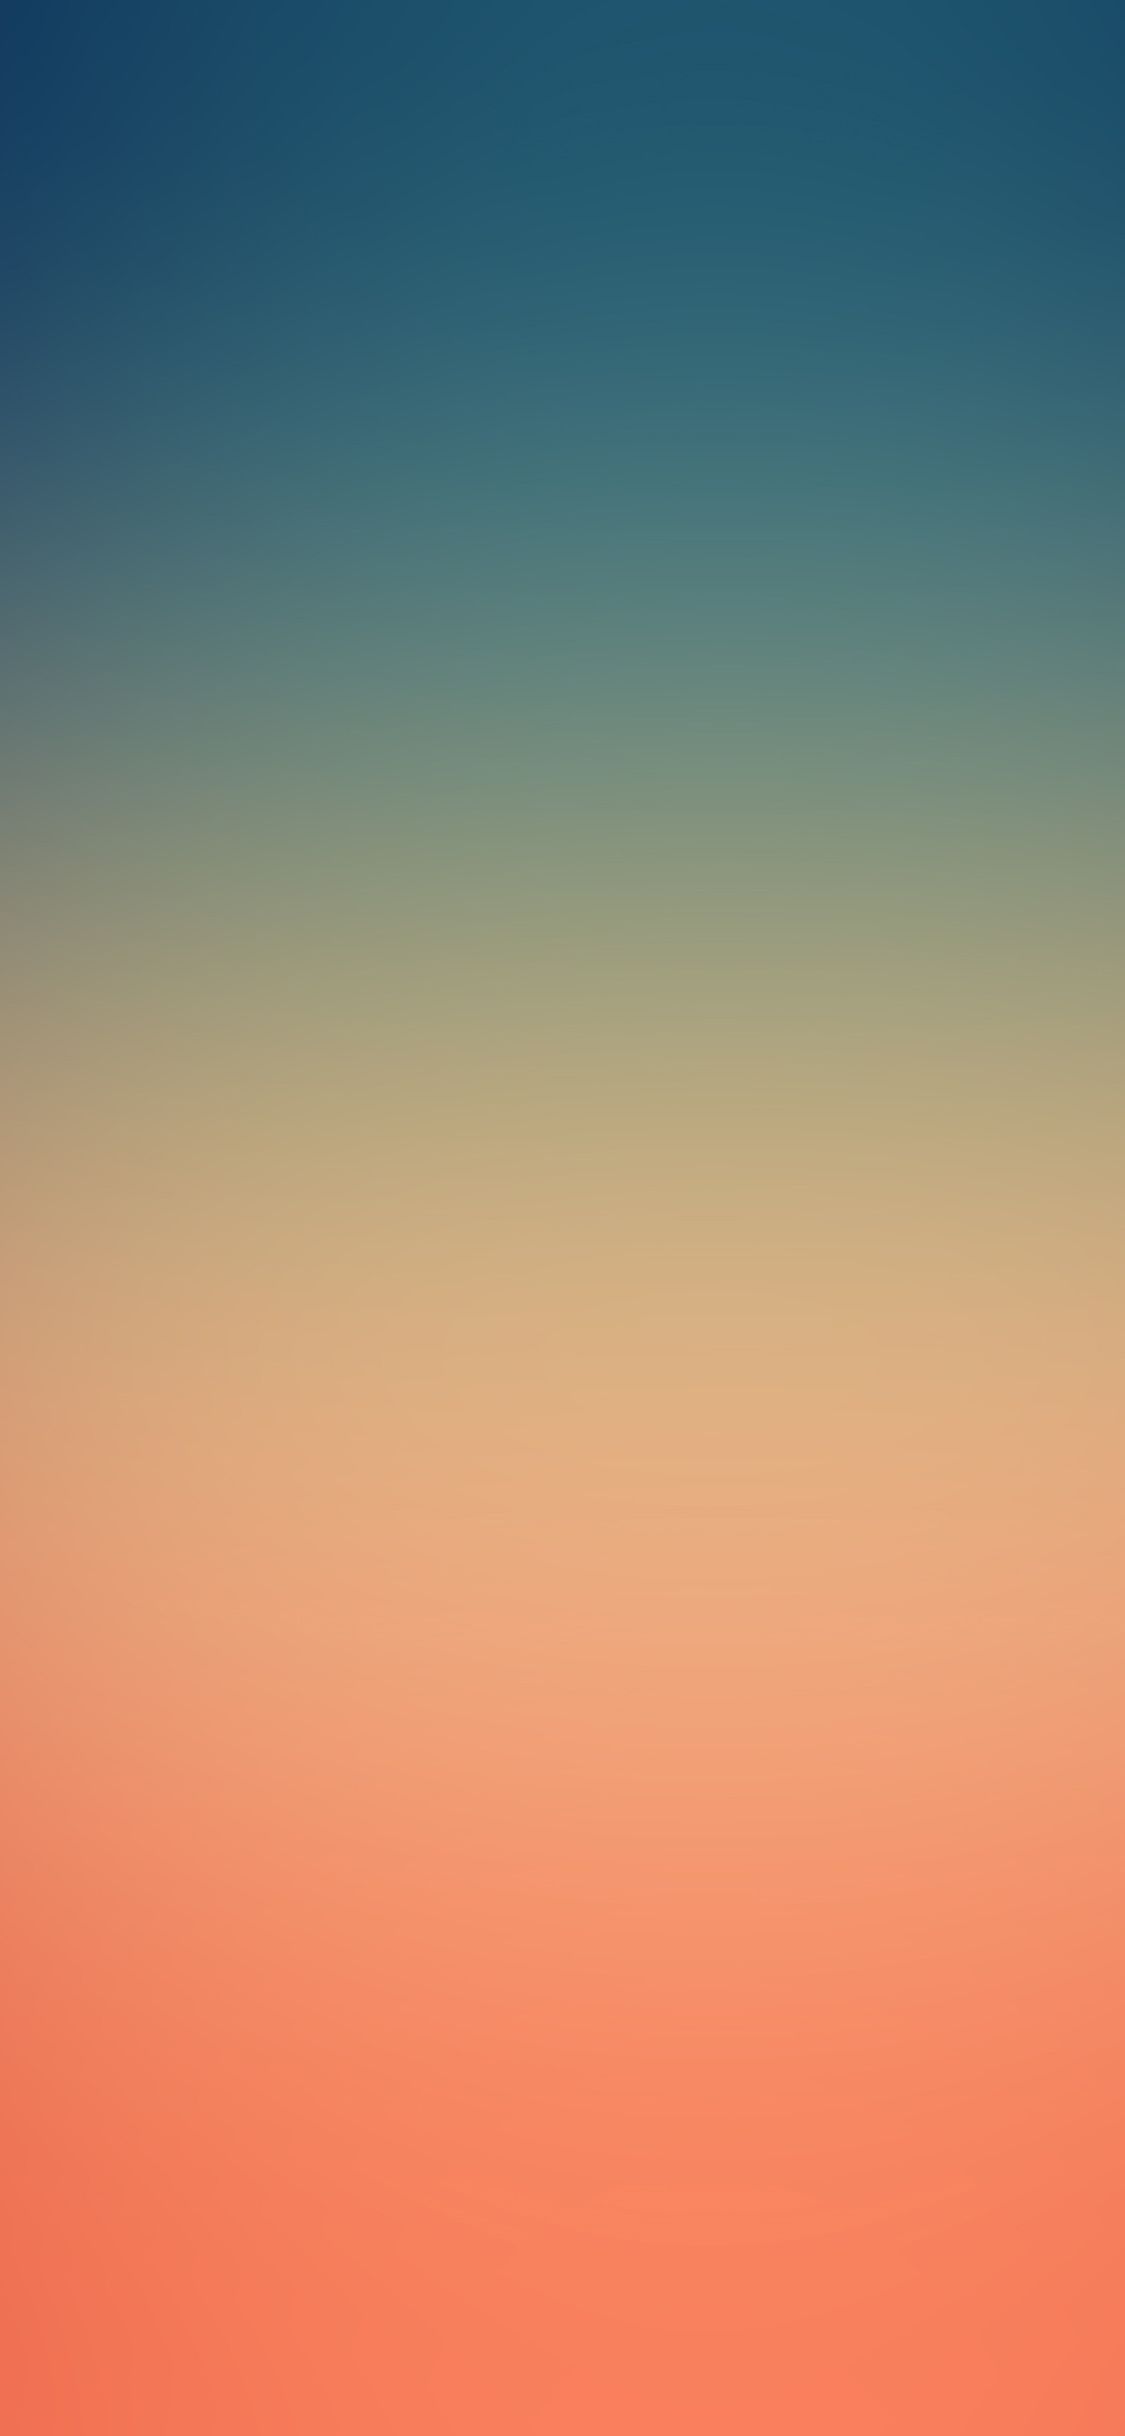 iPhone X wallpaper. blue orange night blur gradation